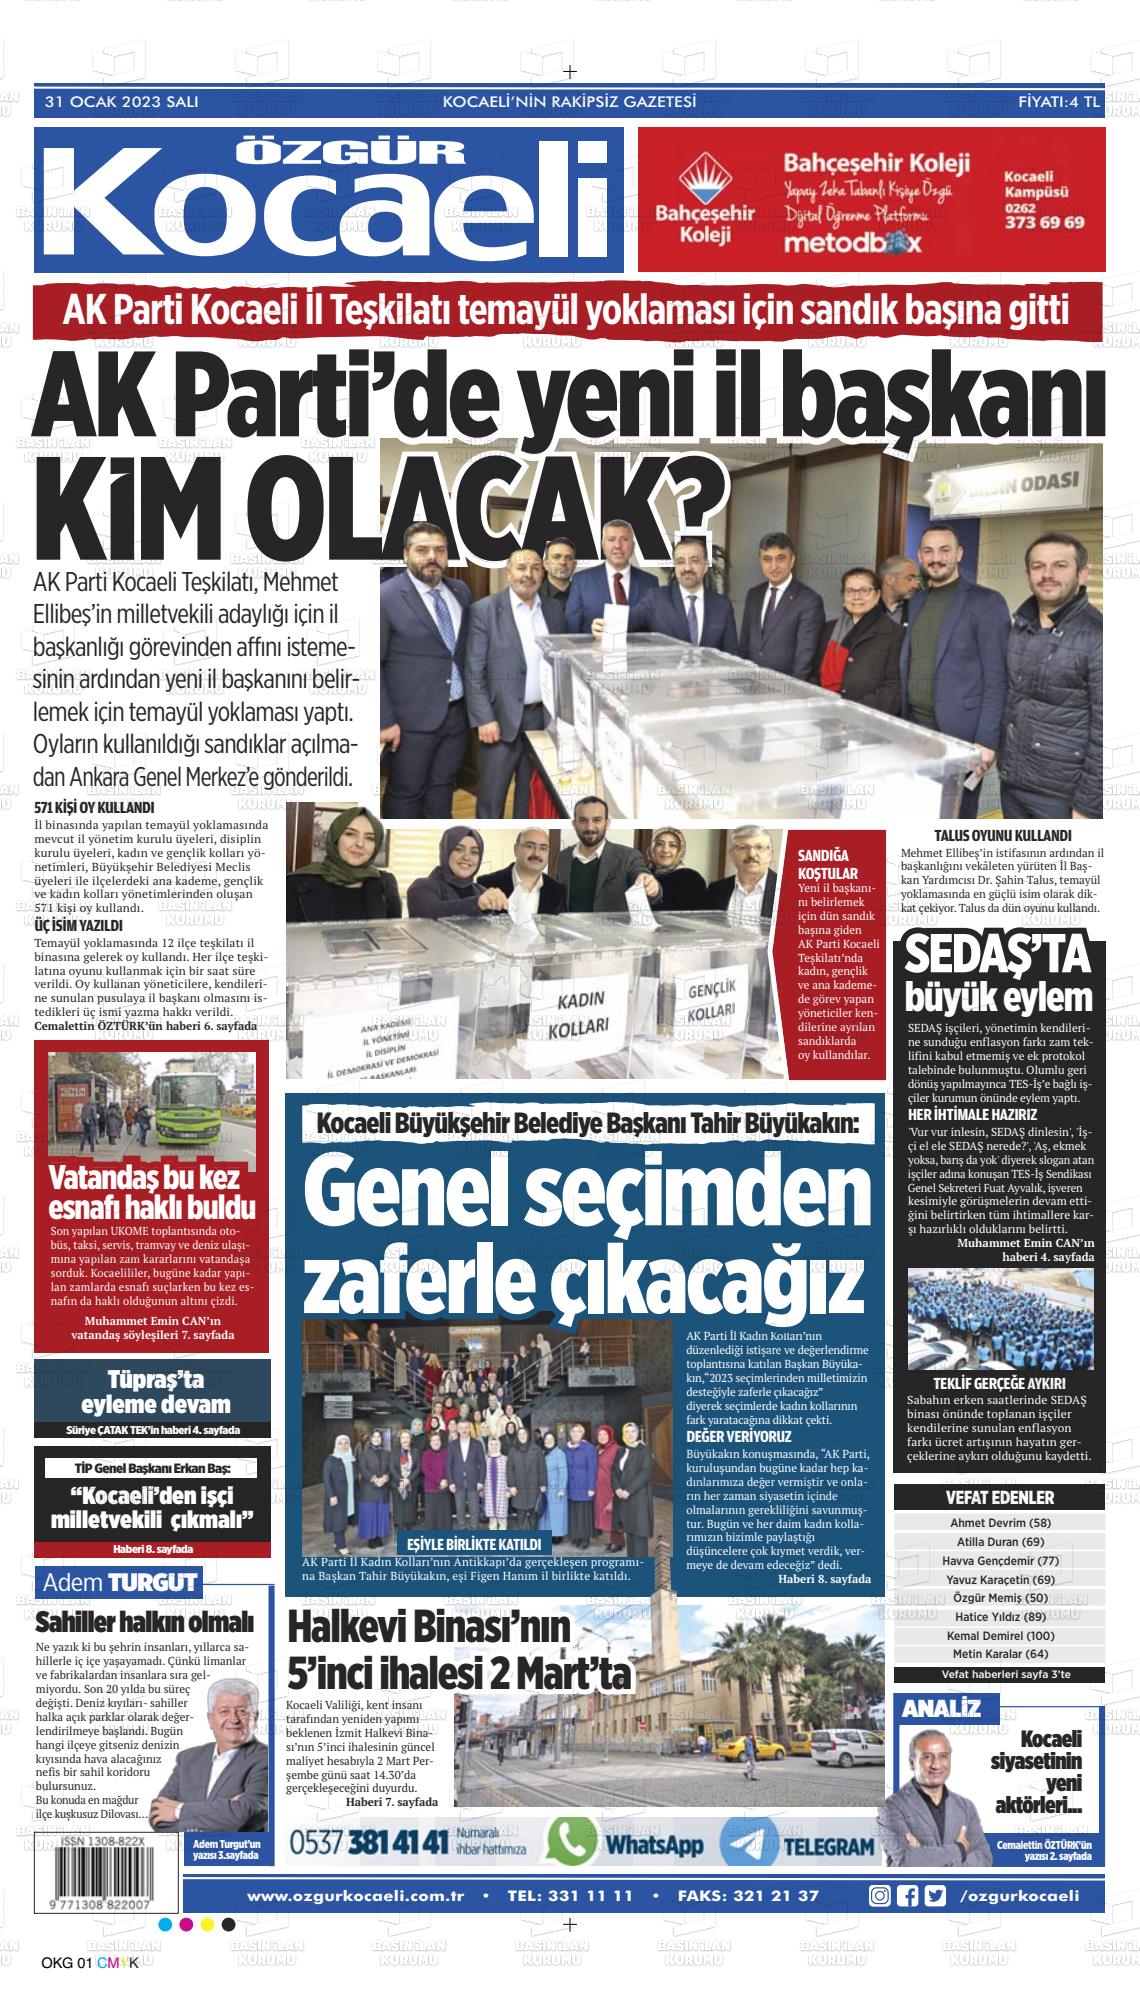 31 Ocak 2023 Özgür Kocaeli Gazete Manşeti